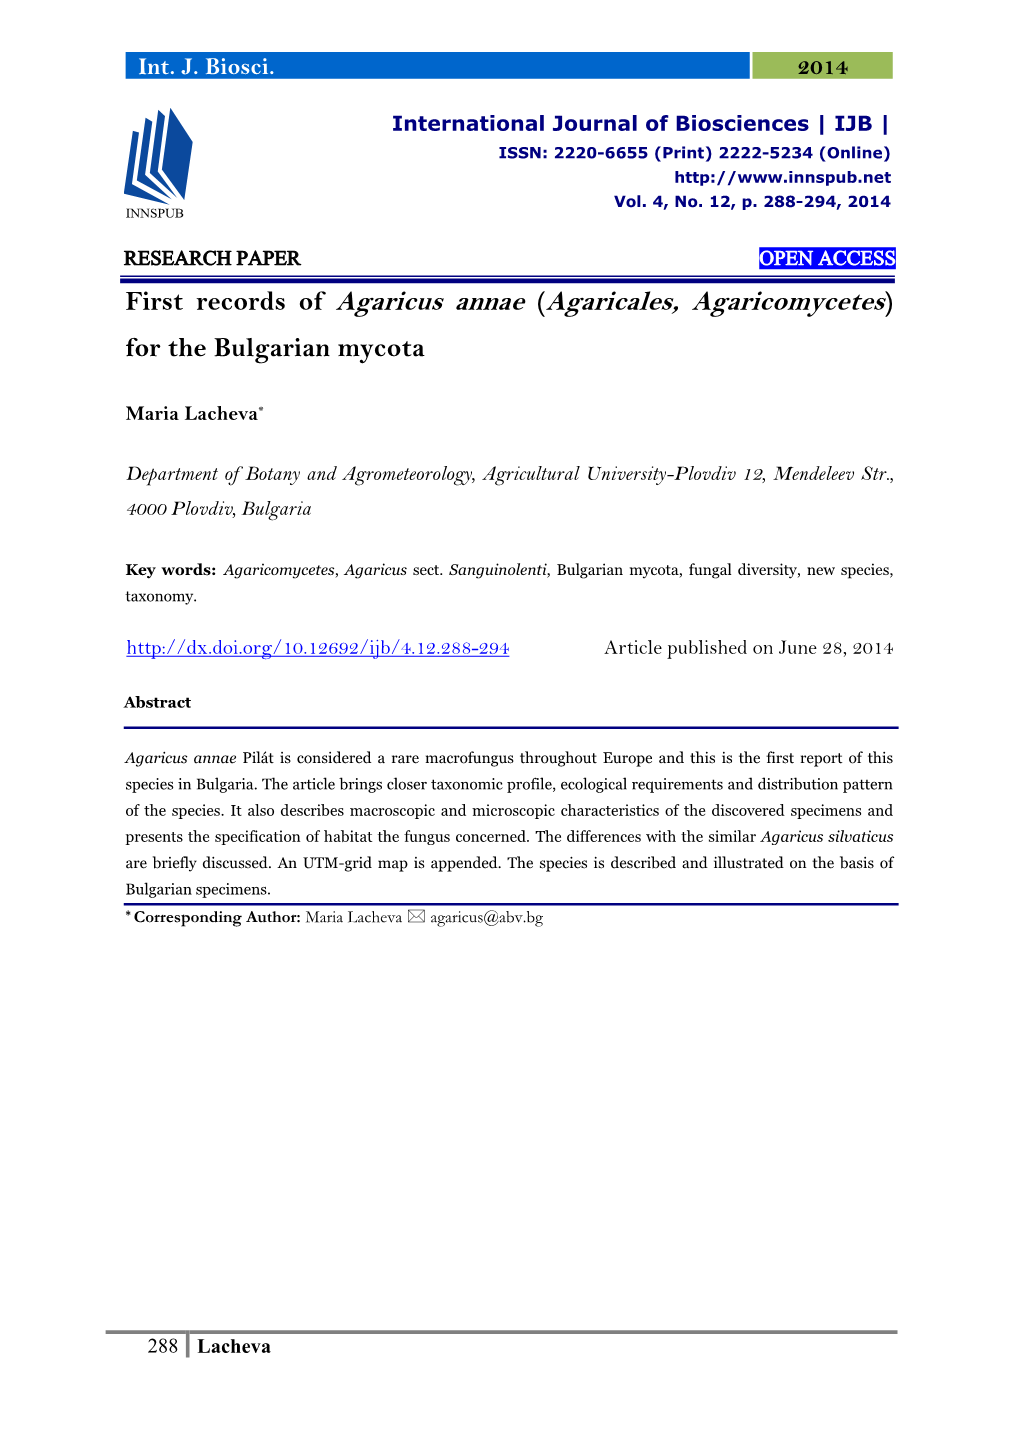 First Records of Agaricus Annae (Agaricales, Agaricomycetes) for the Bulgarian Mycota